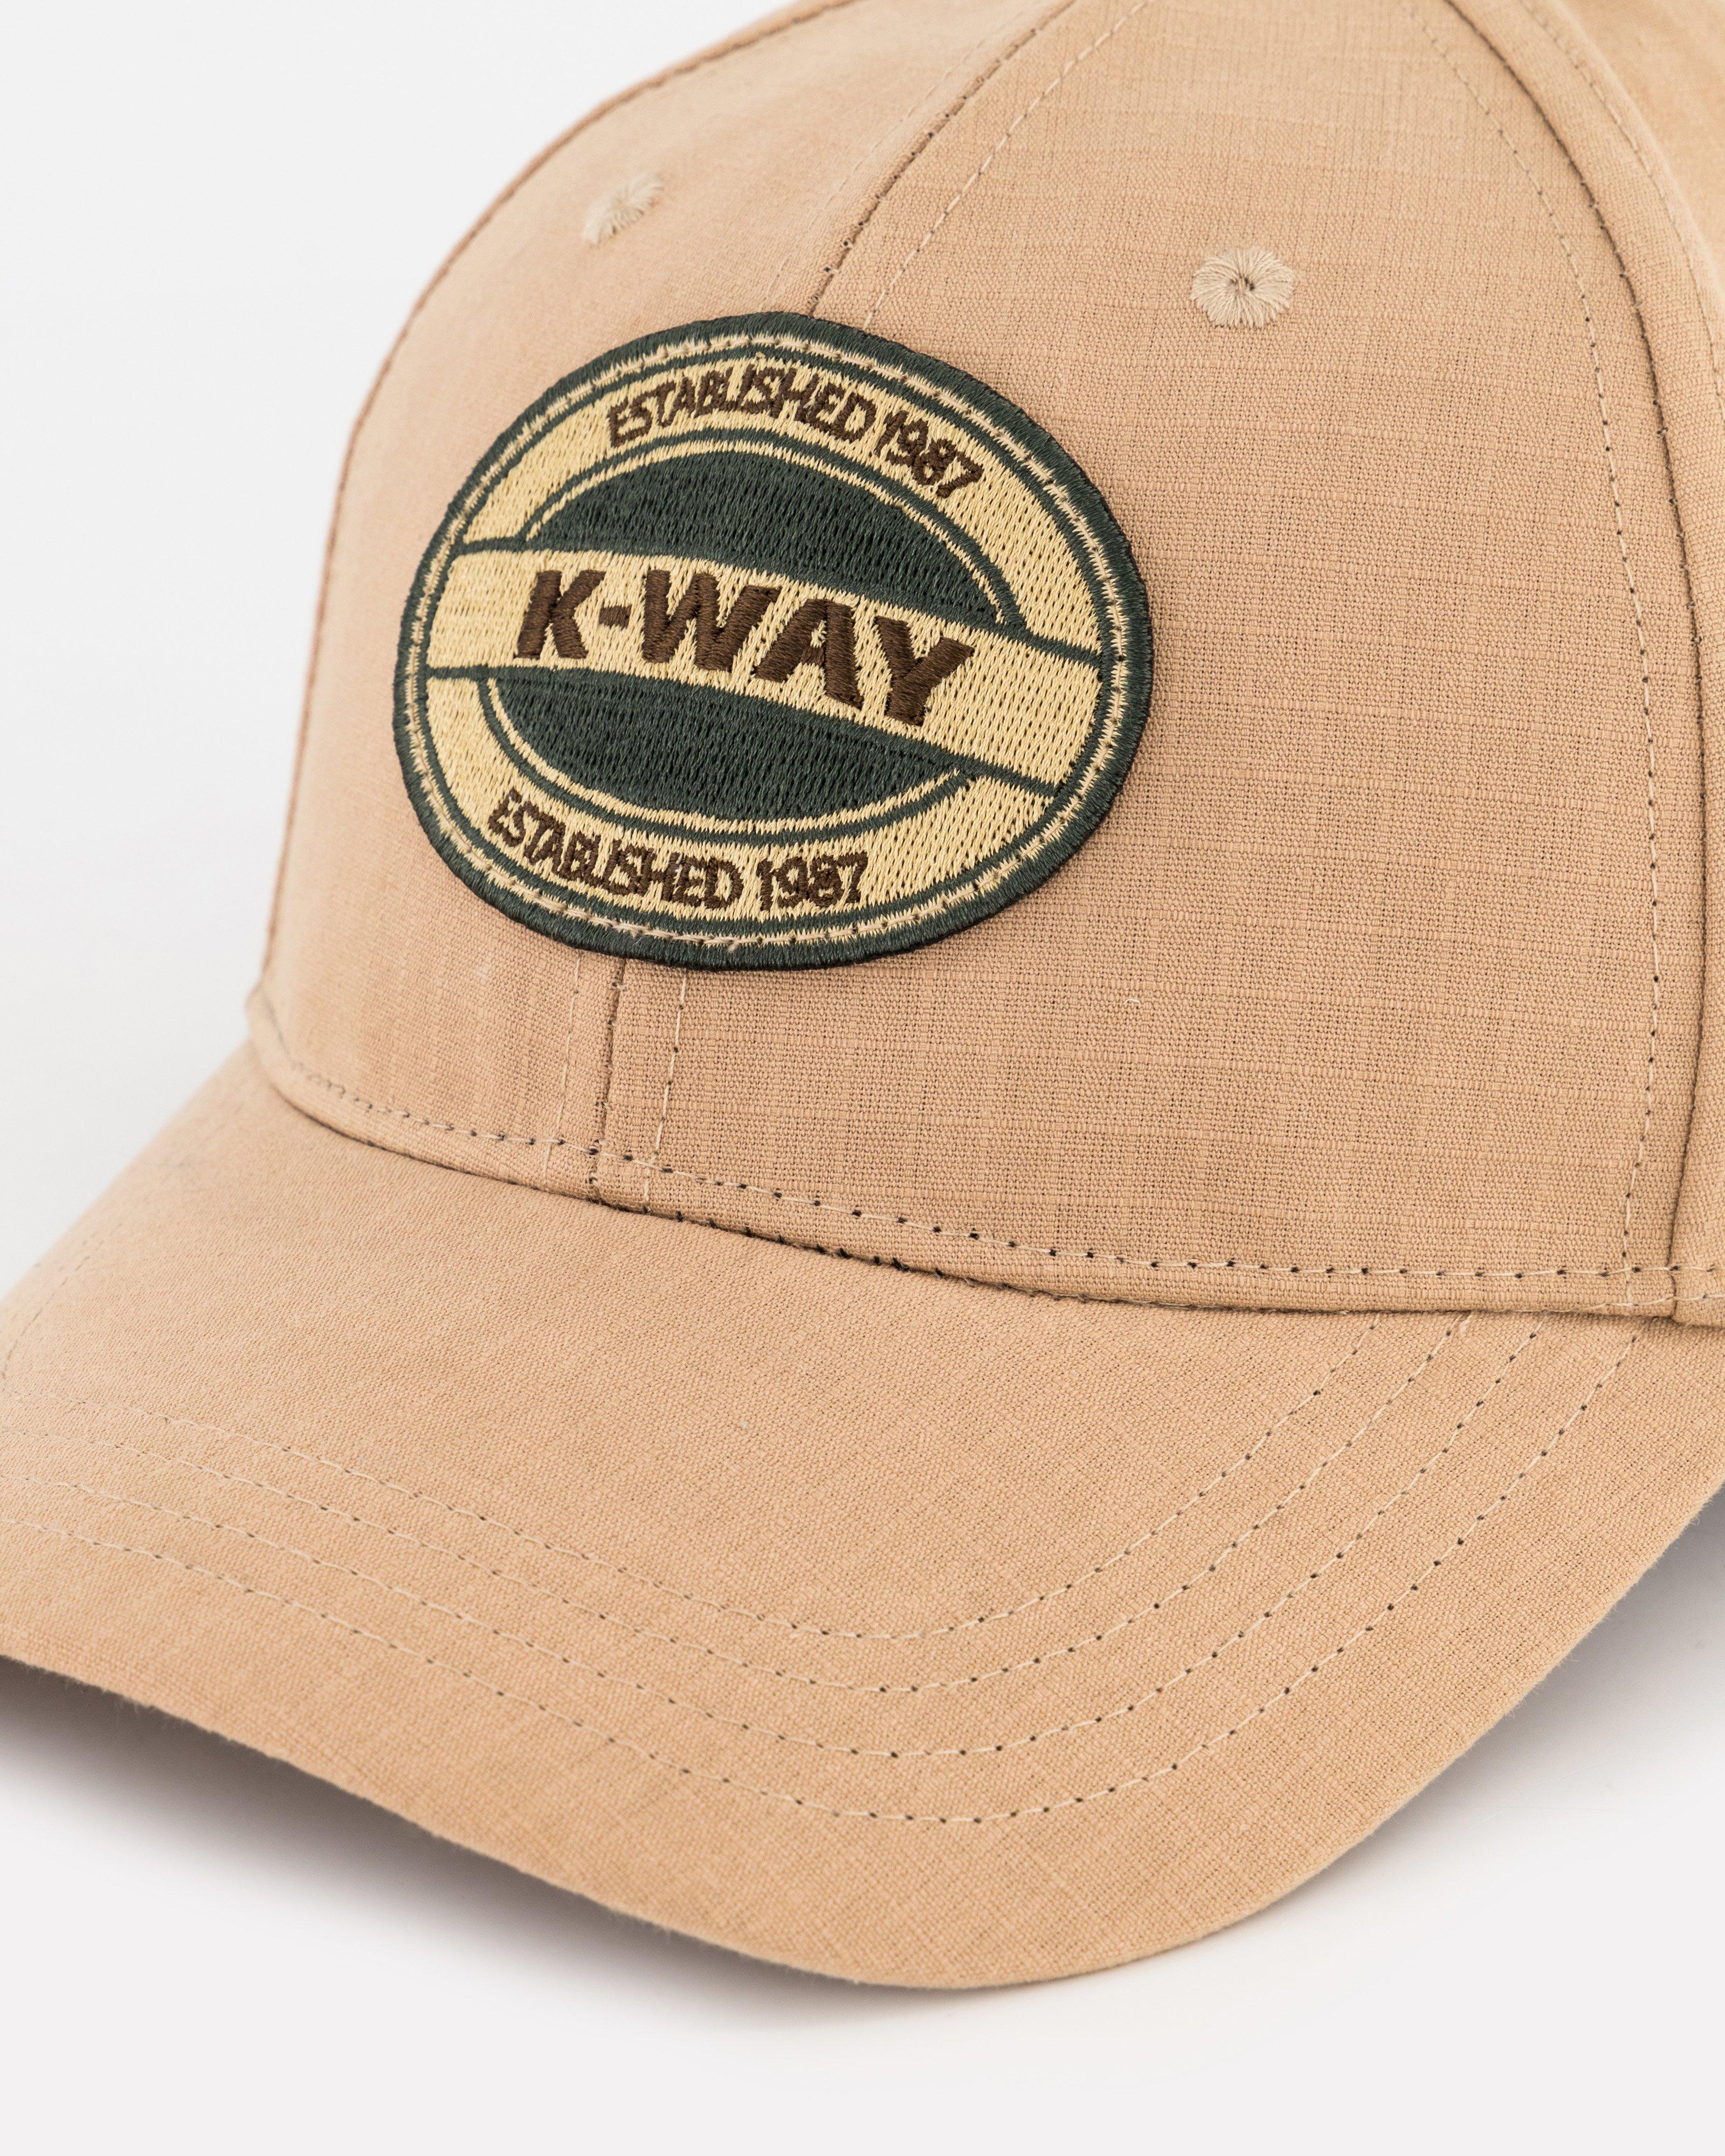 K-Way Elements Men's Outpost Peak Cap